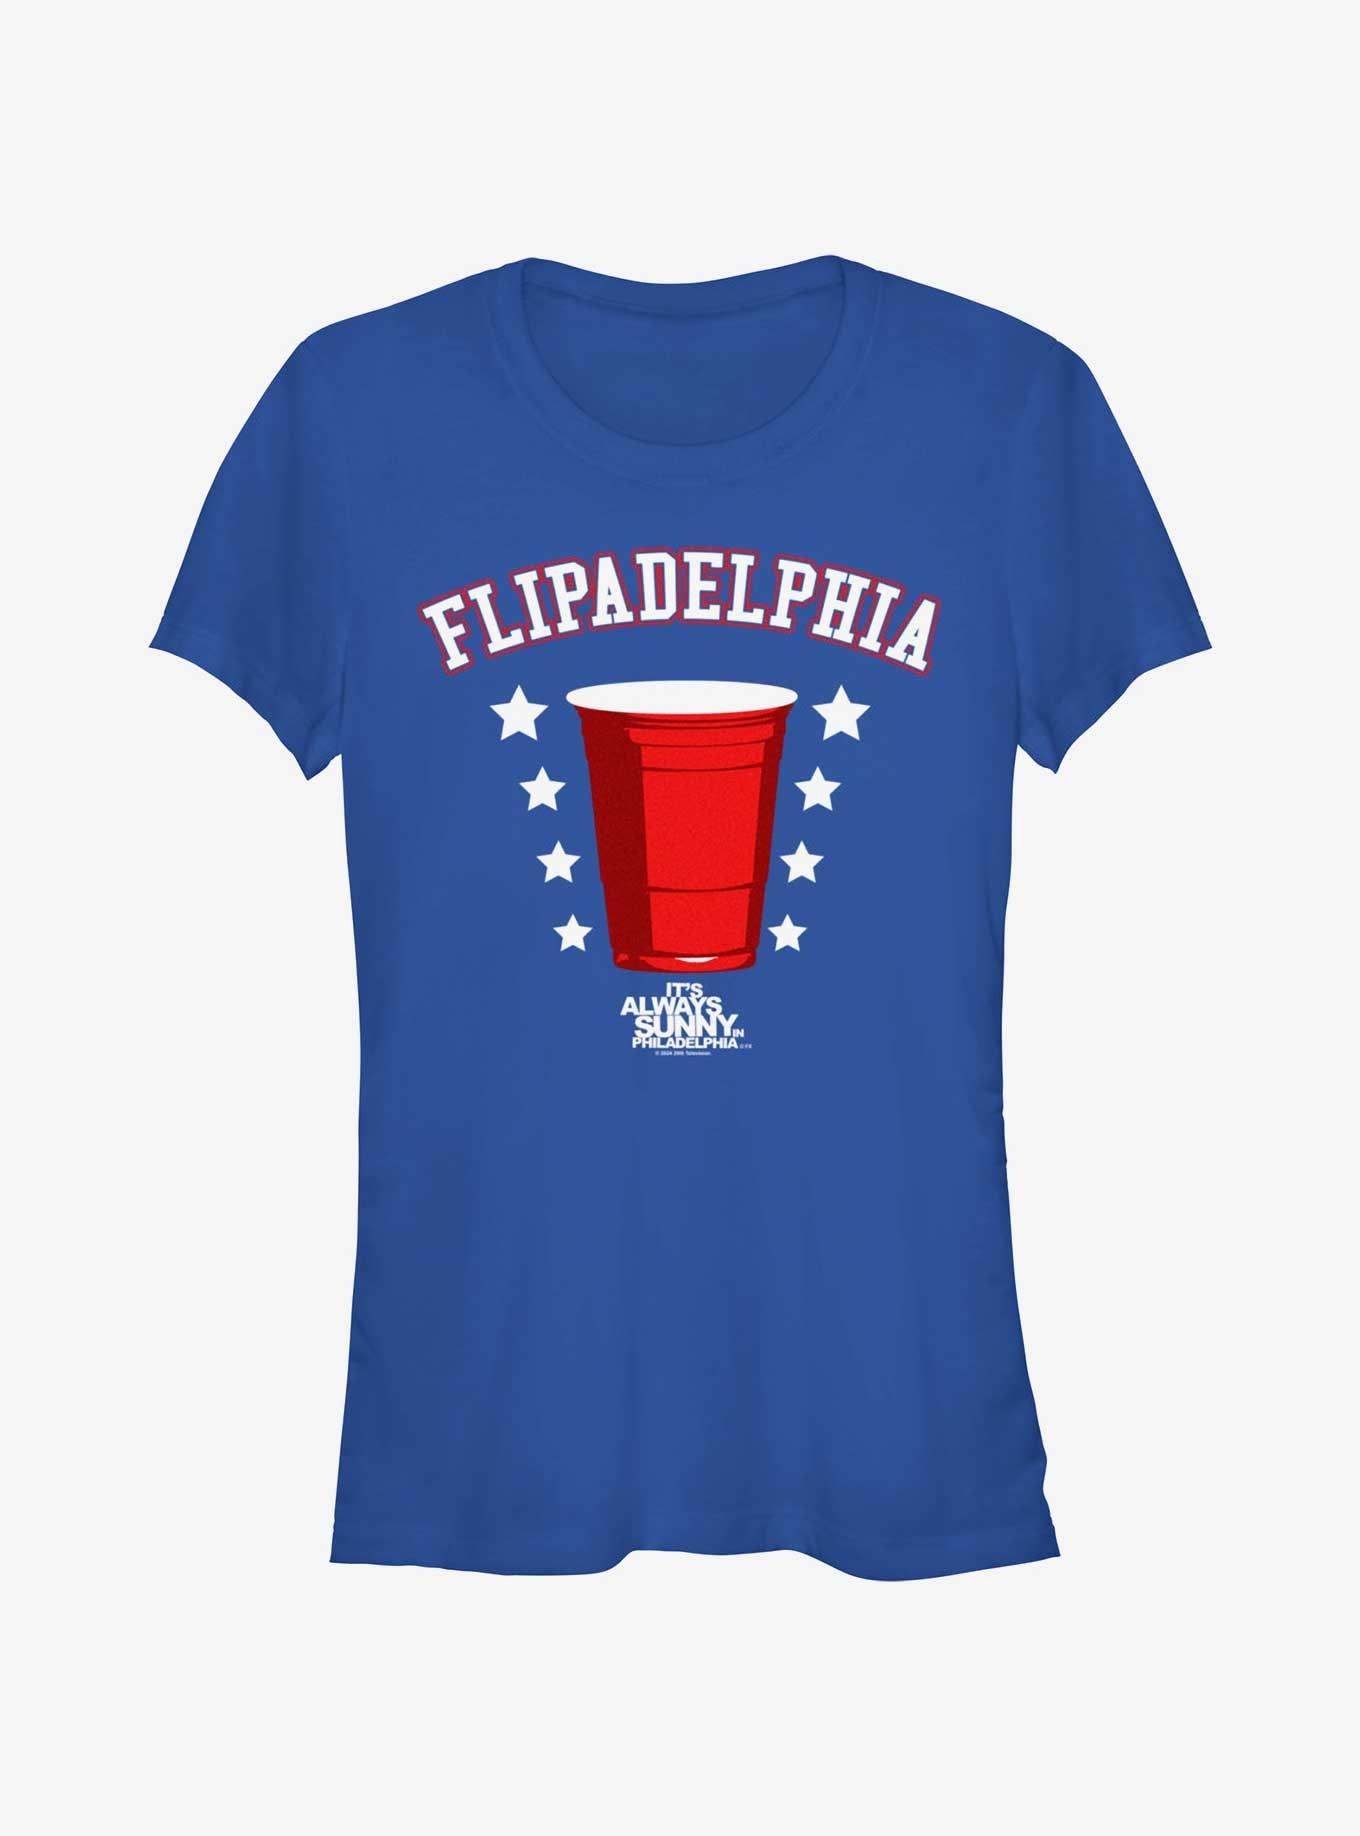 It's Always Sunny Philadelphia Flipadelphia - Royal